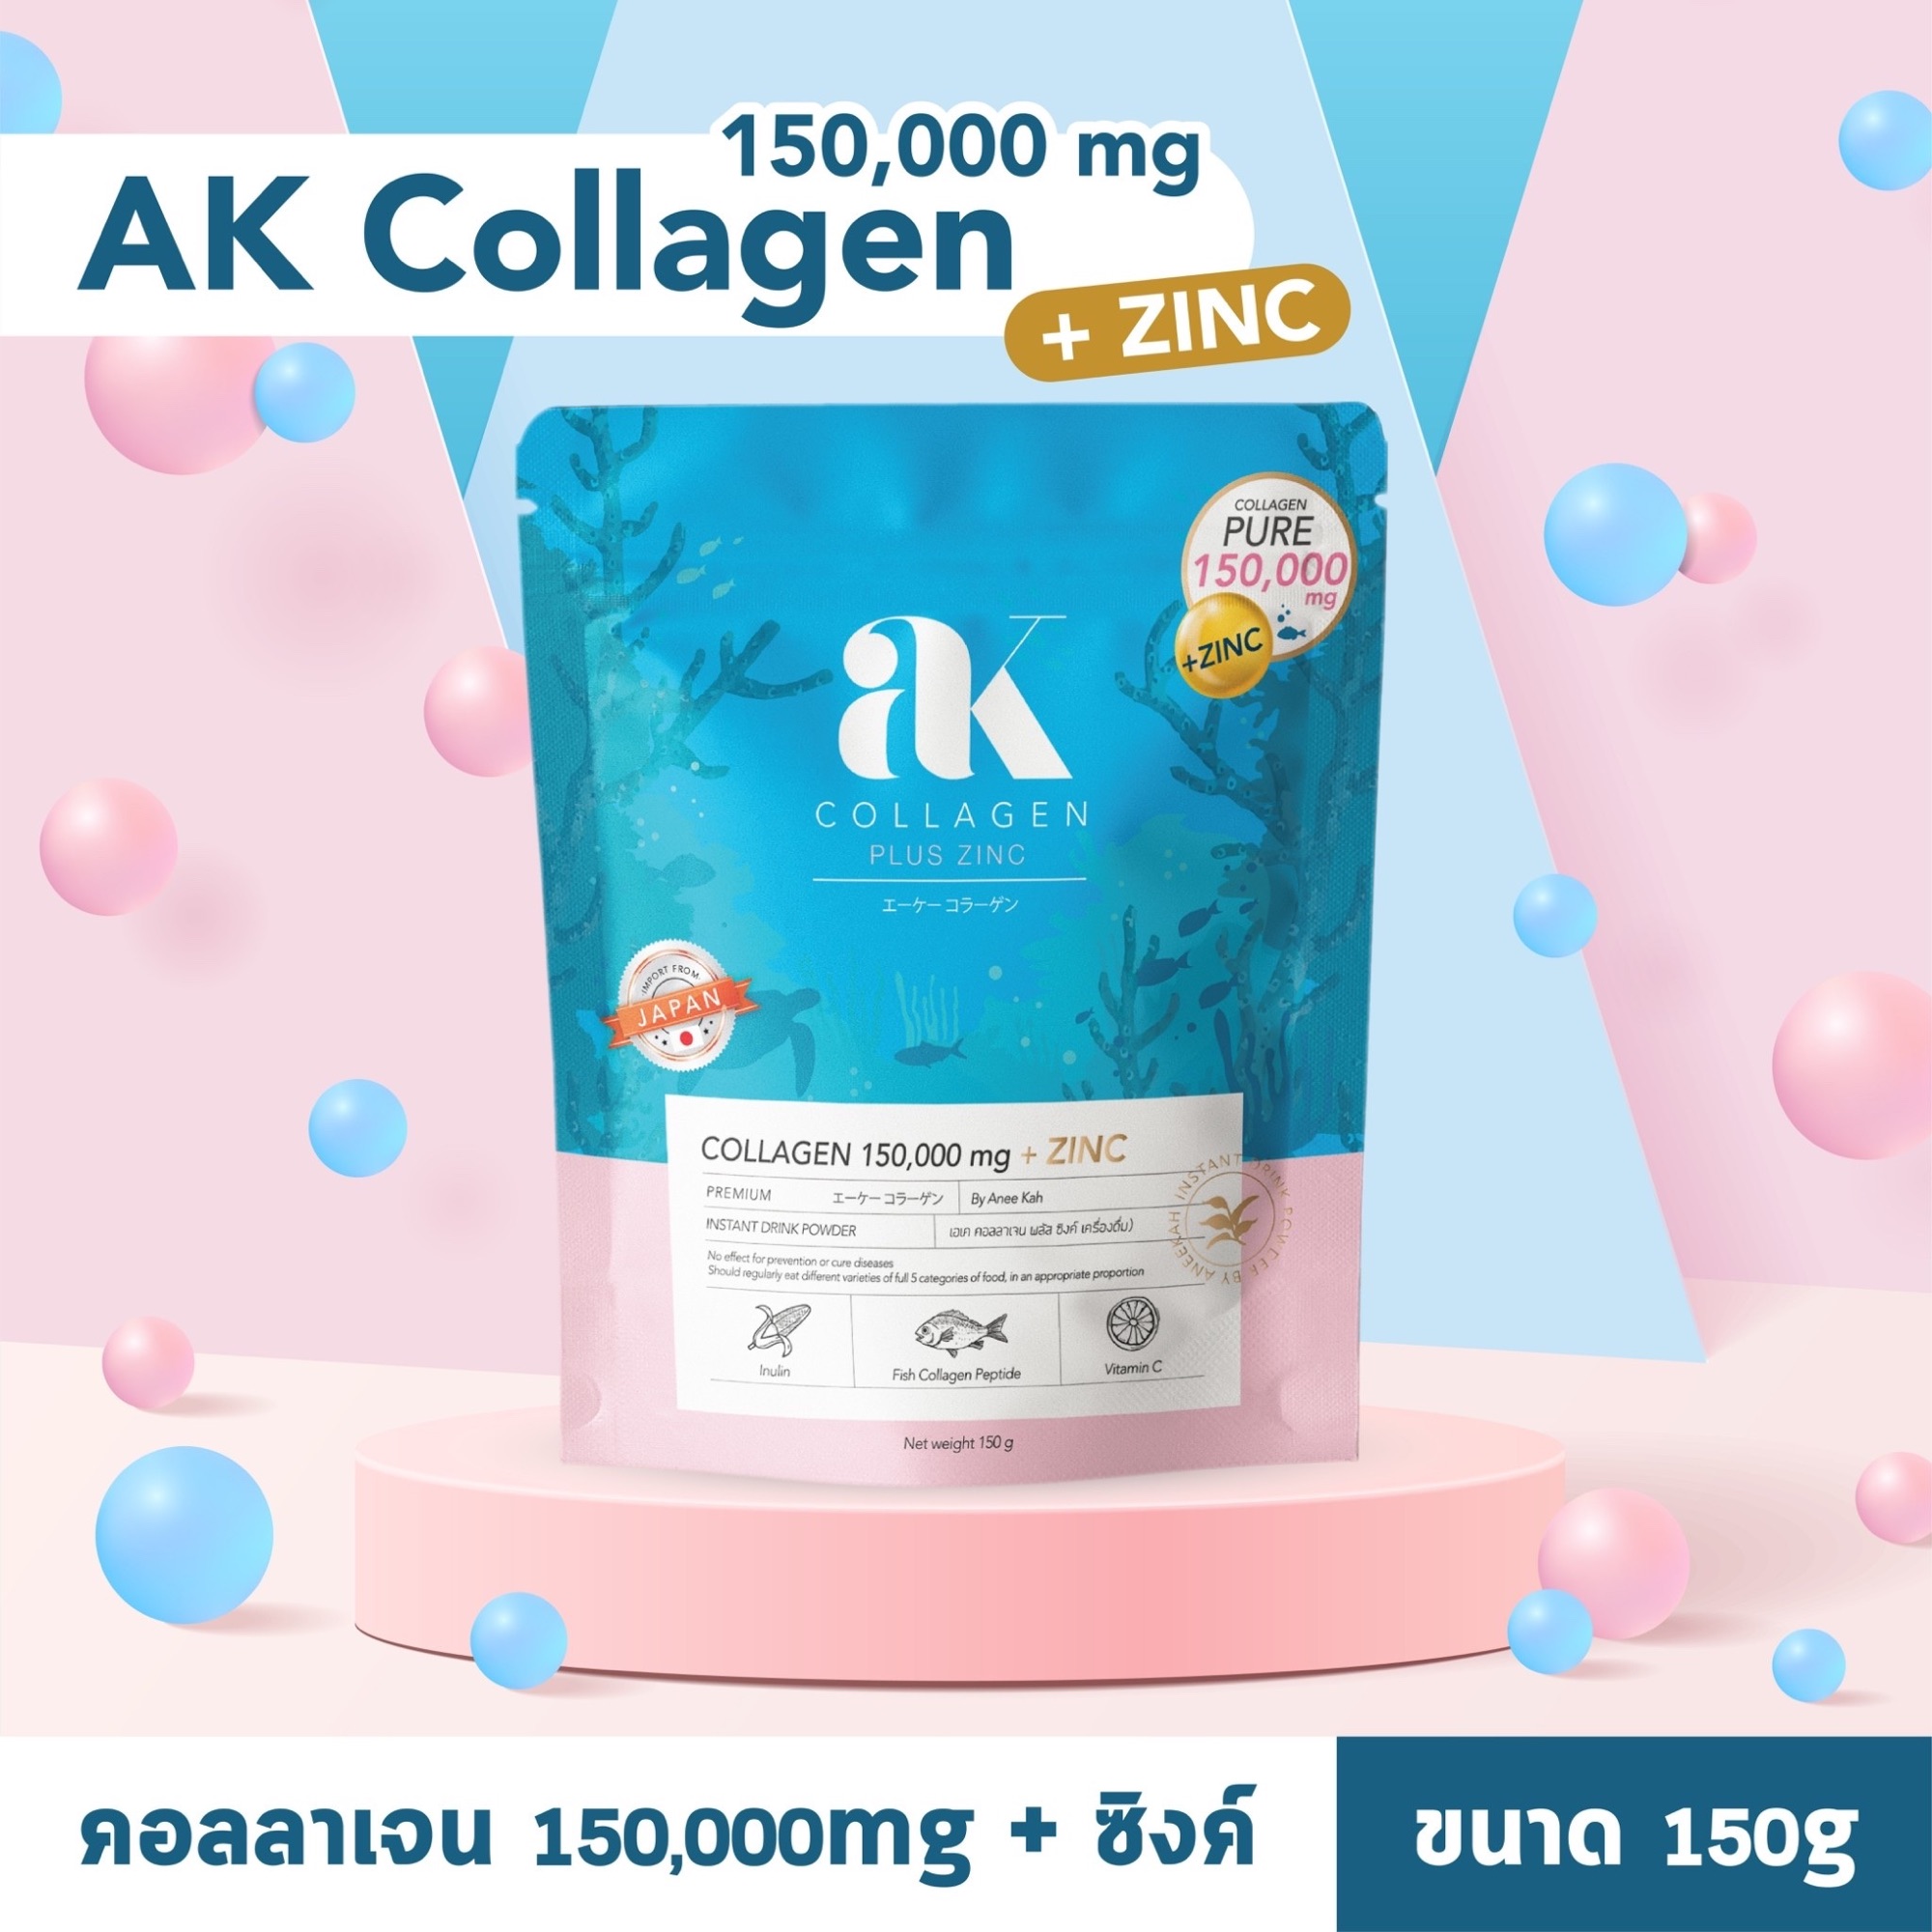 AK Collagen Plus Zinc เอเค คอลลาเจน พลัส ซิงค์ คอลลาเจนเปปไทด์ 150,000 มก.